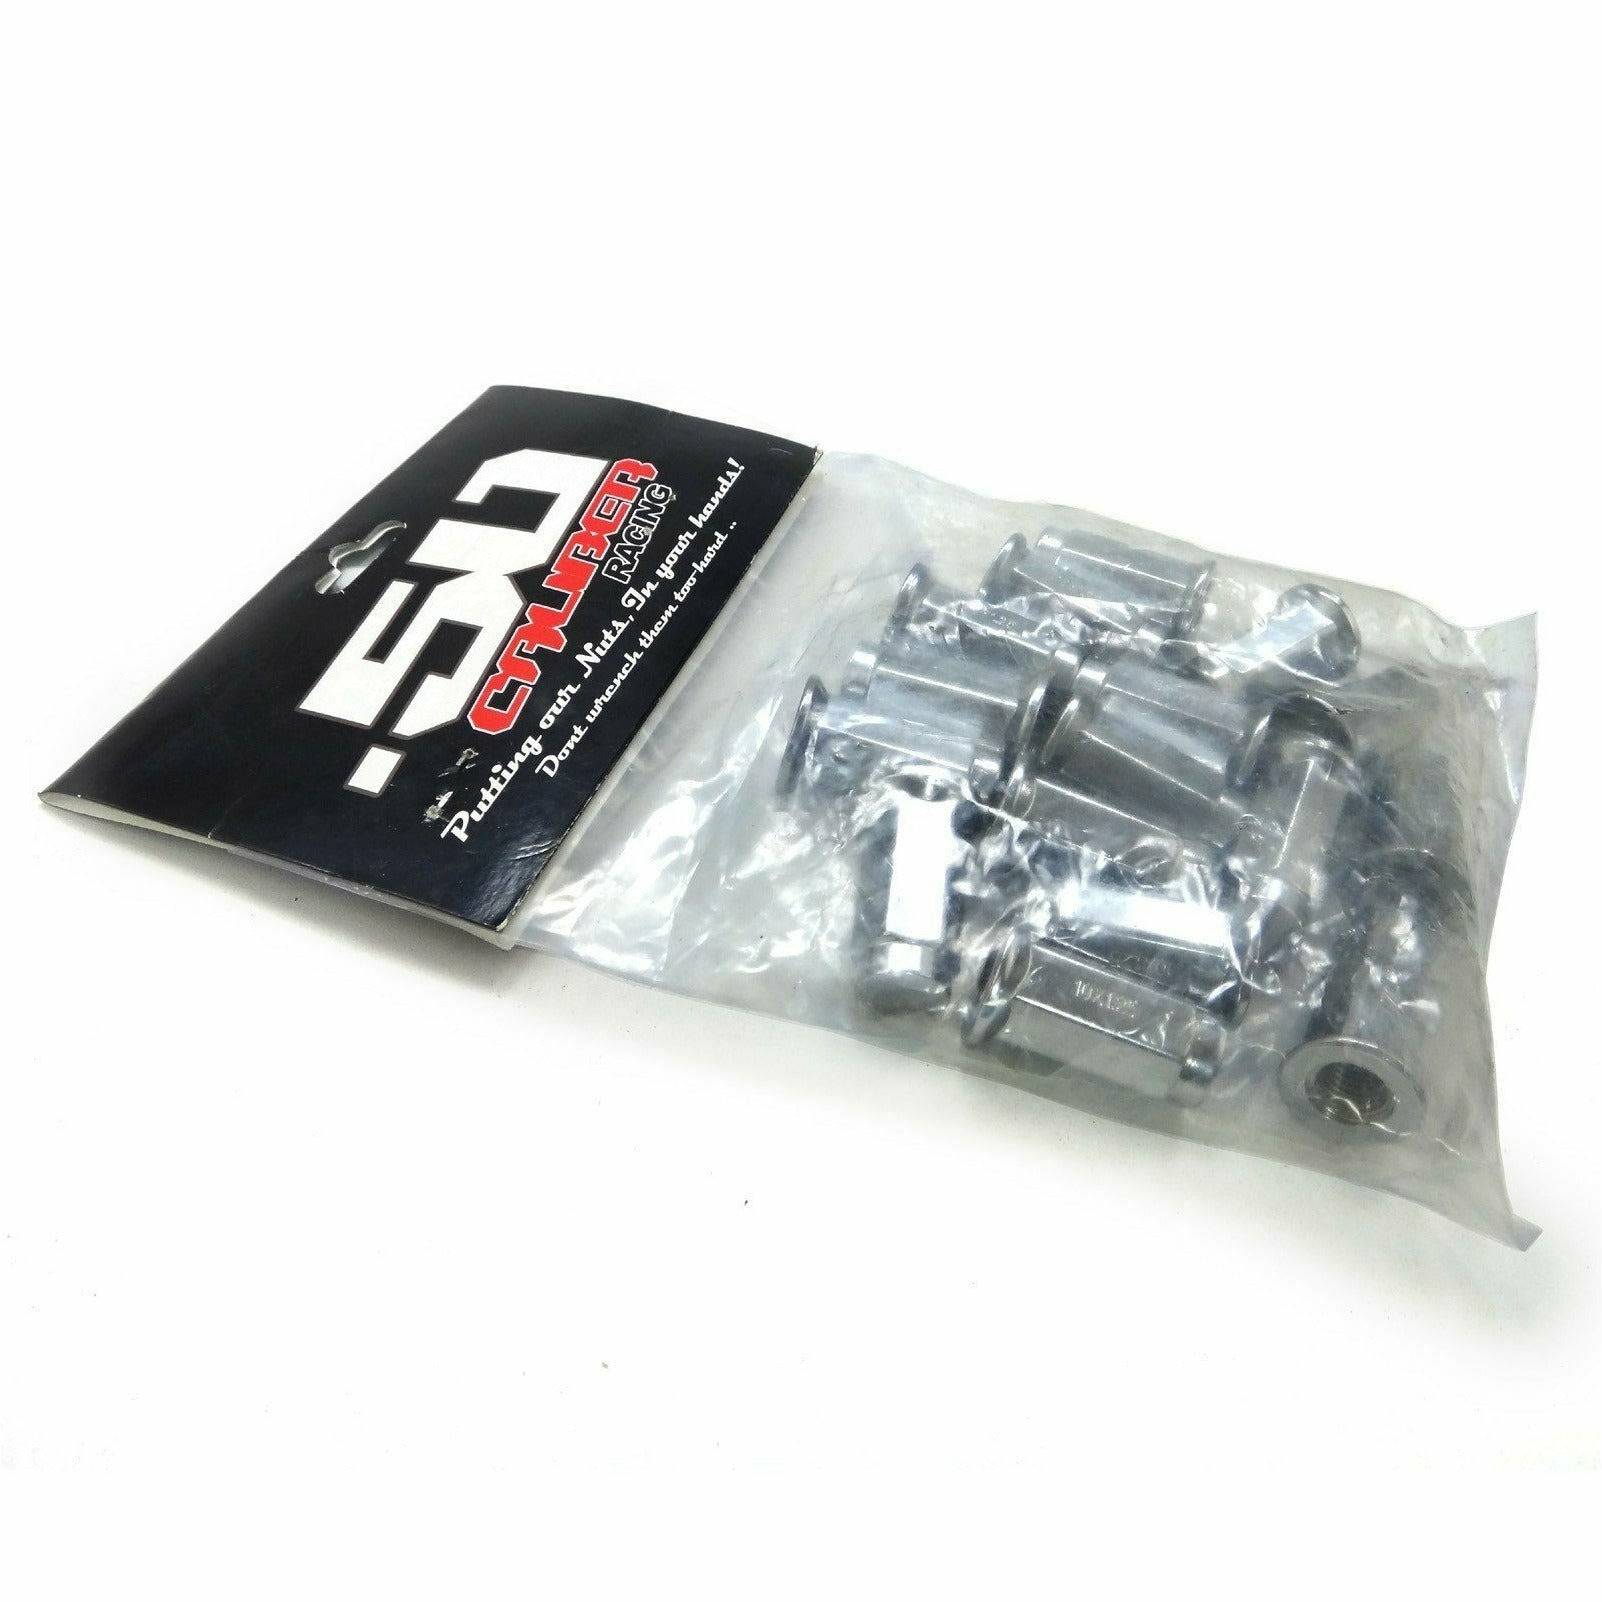 50 Caliber Racing Lug Nuts 12x1.25 17mm Hex (16 Pack)